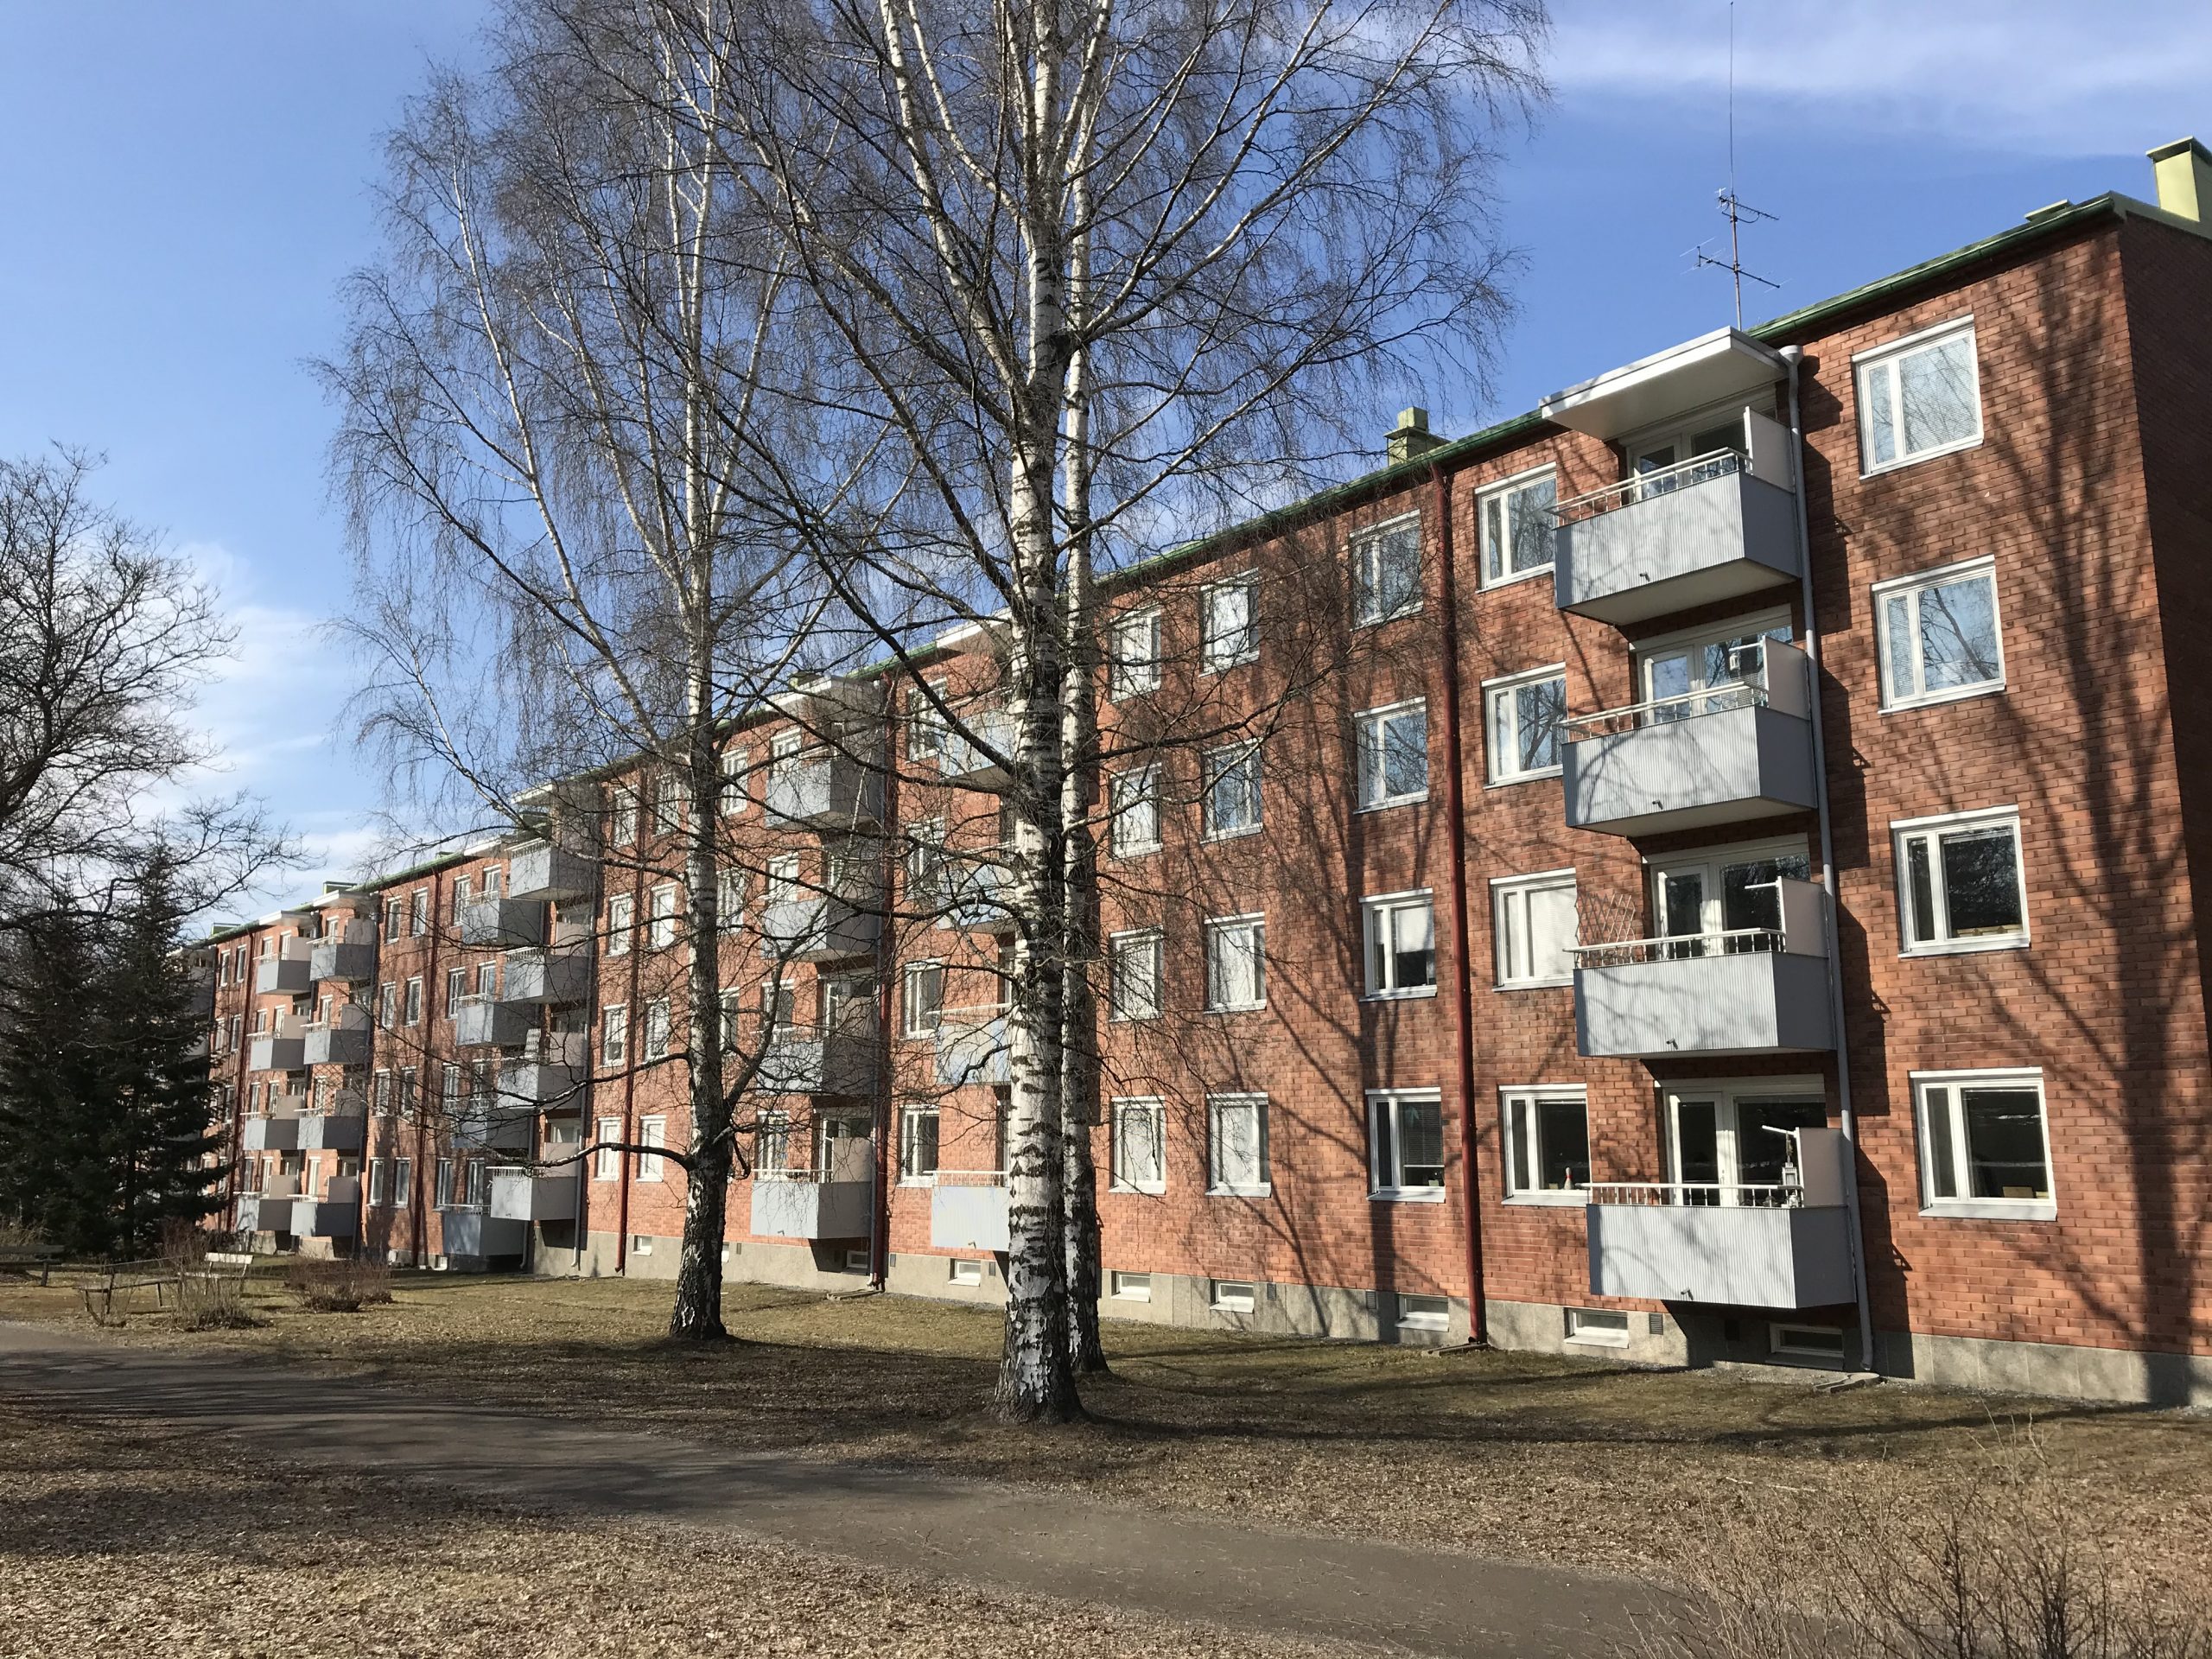 As Oy Sammonkatu 30, Tampere